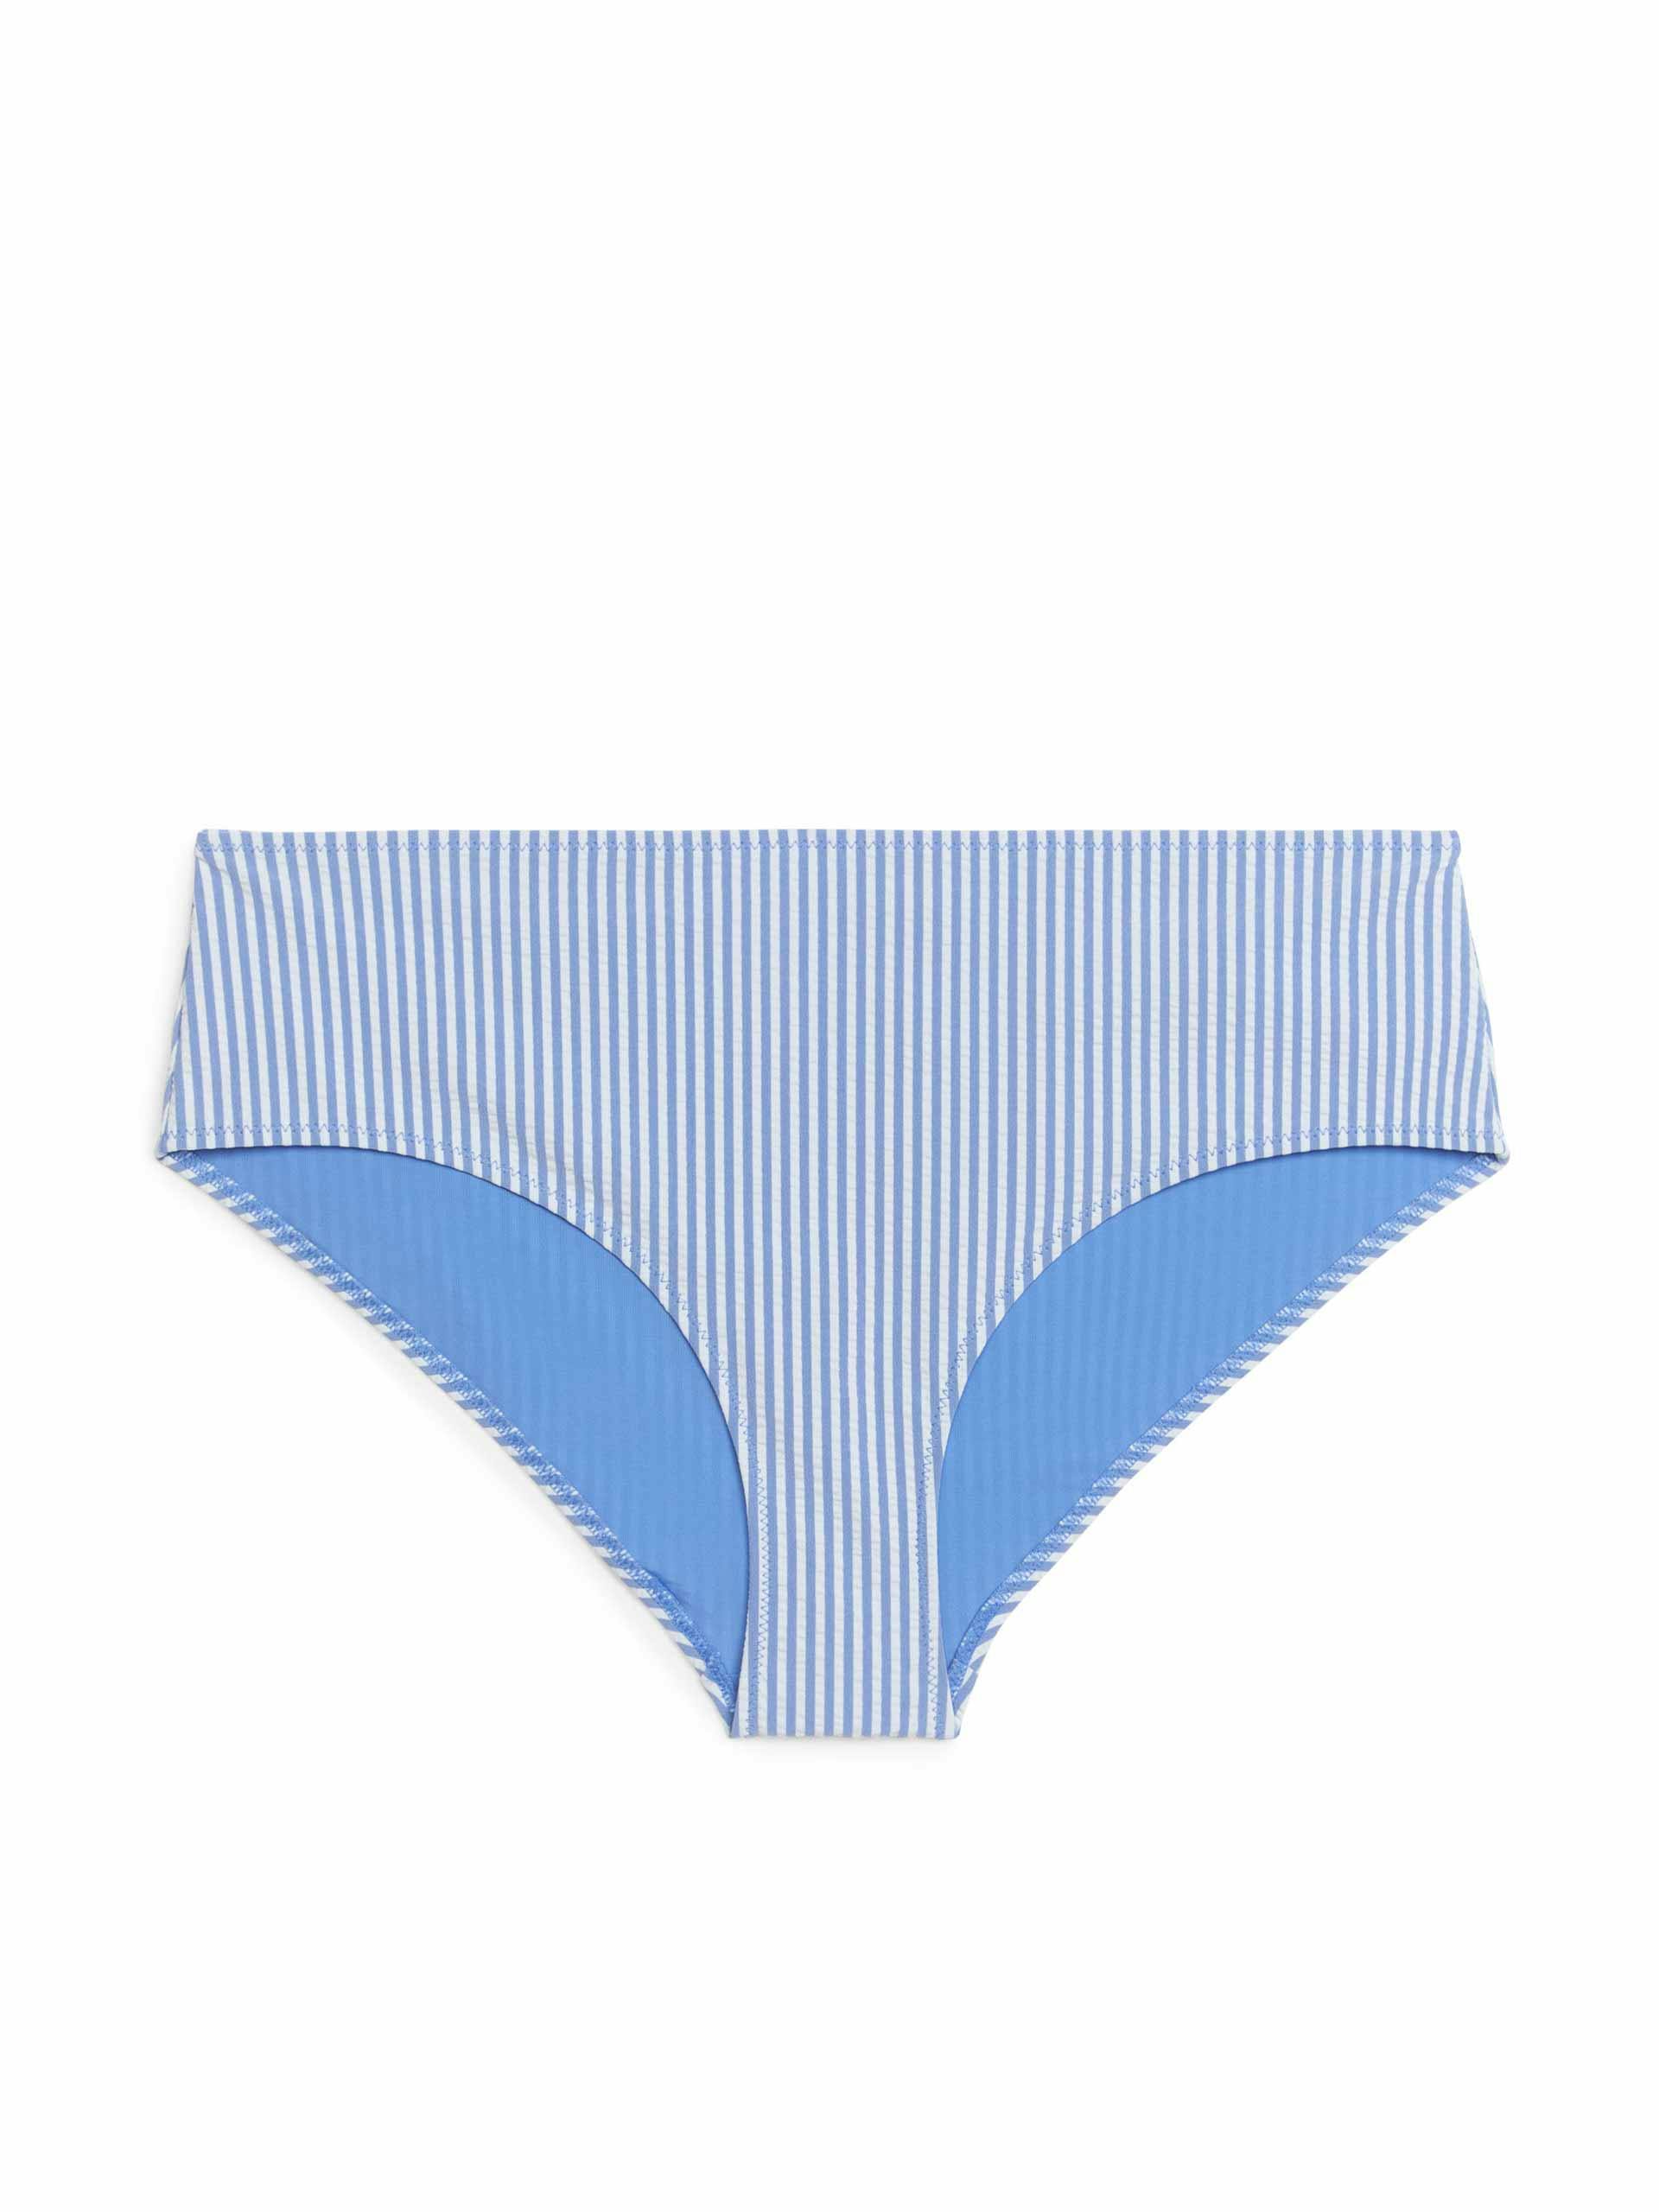 Blue and white striped seersucker bikini bottoms